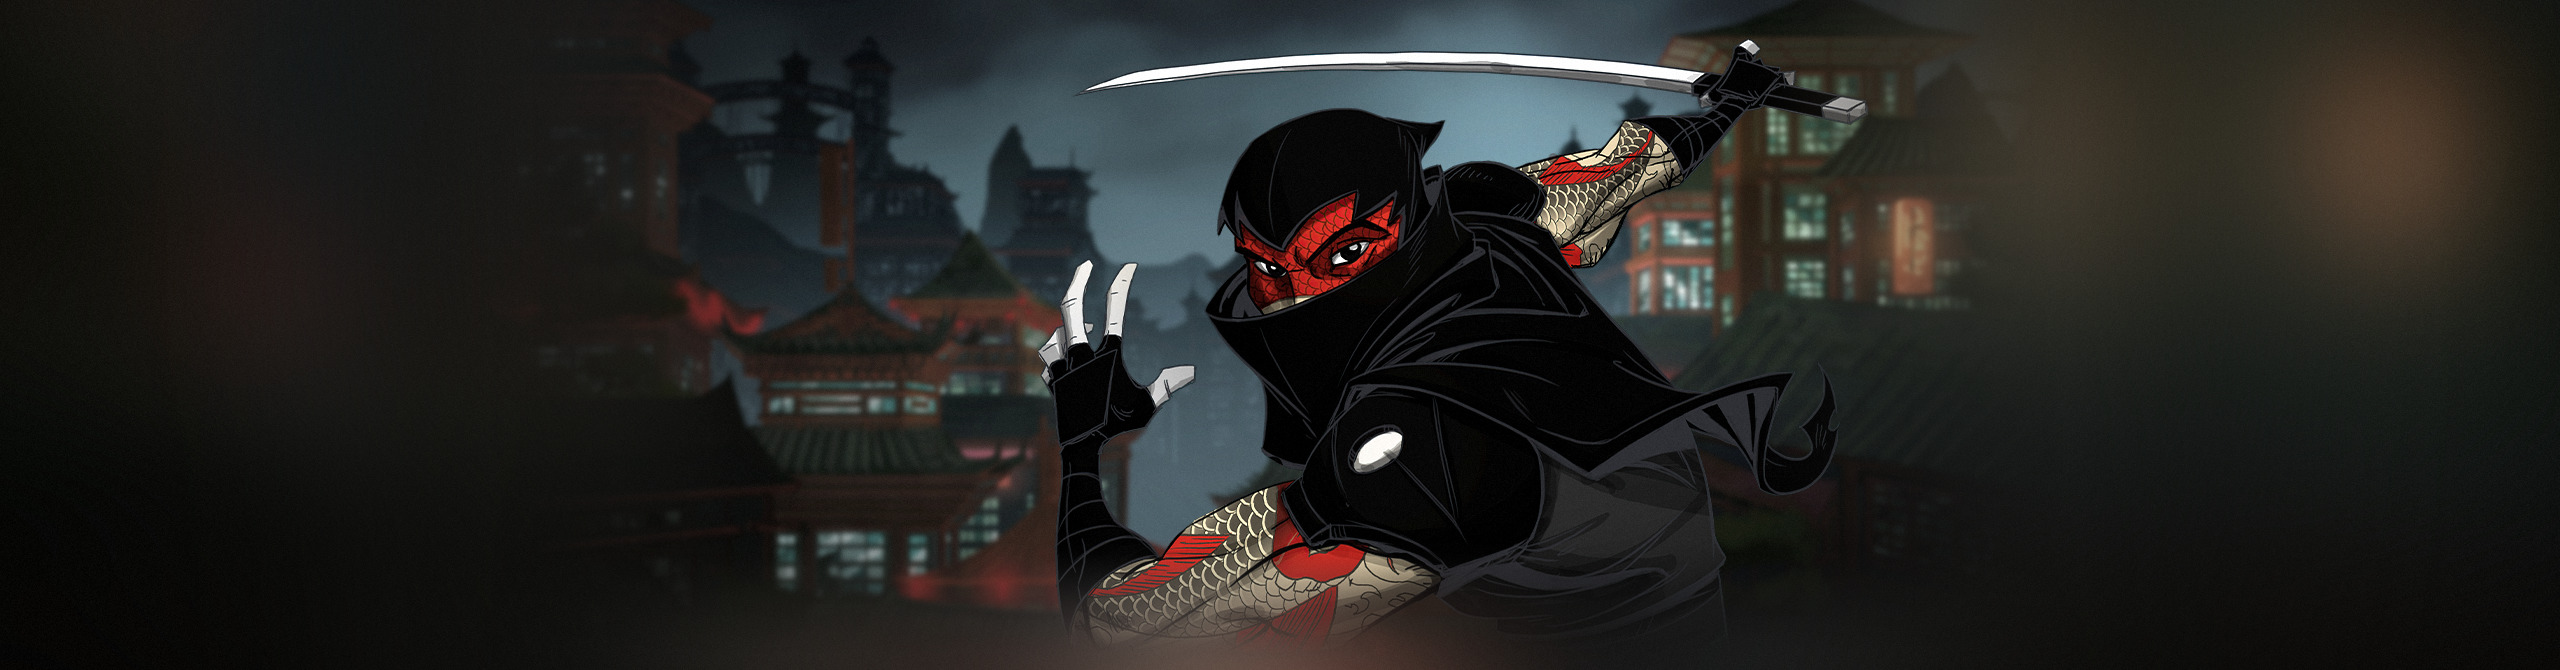 download free mark of the ninja gog